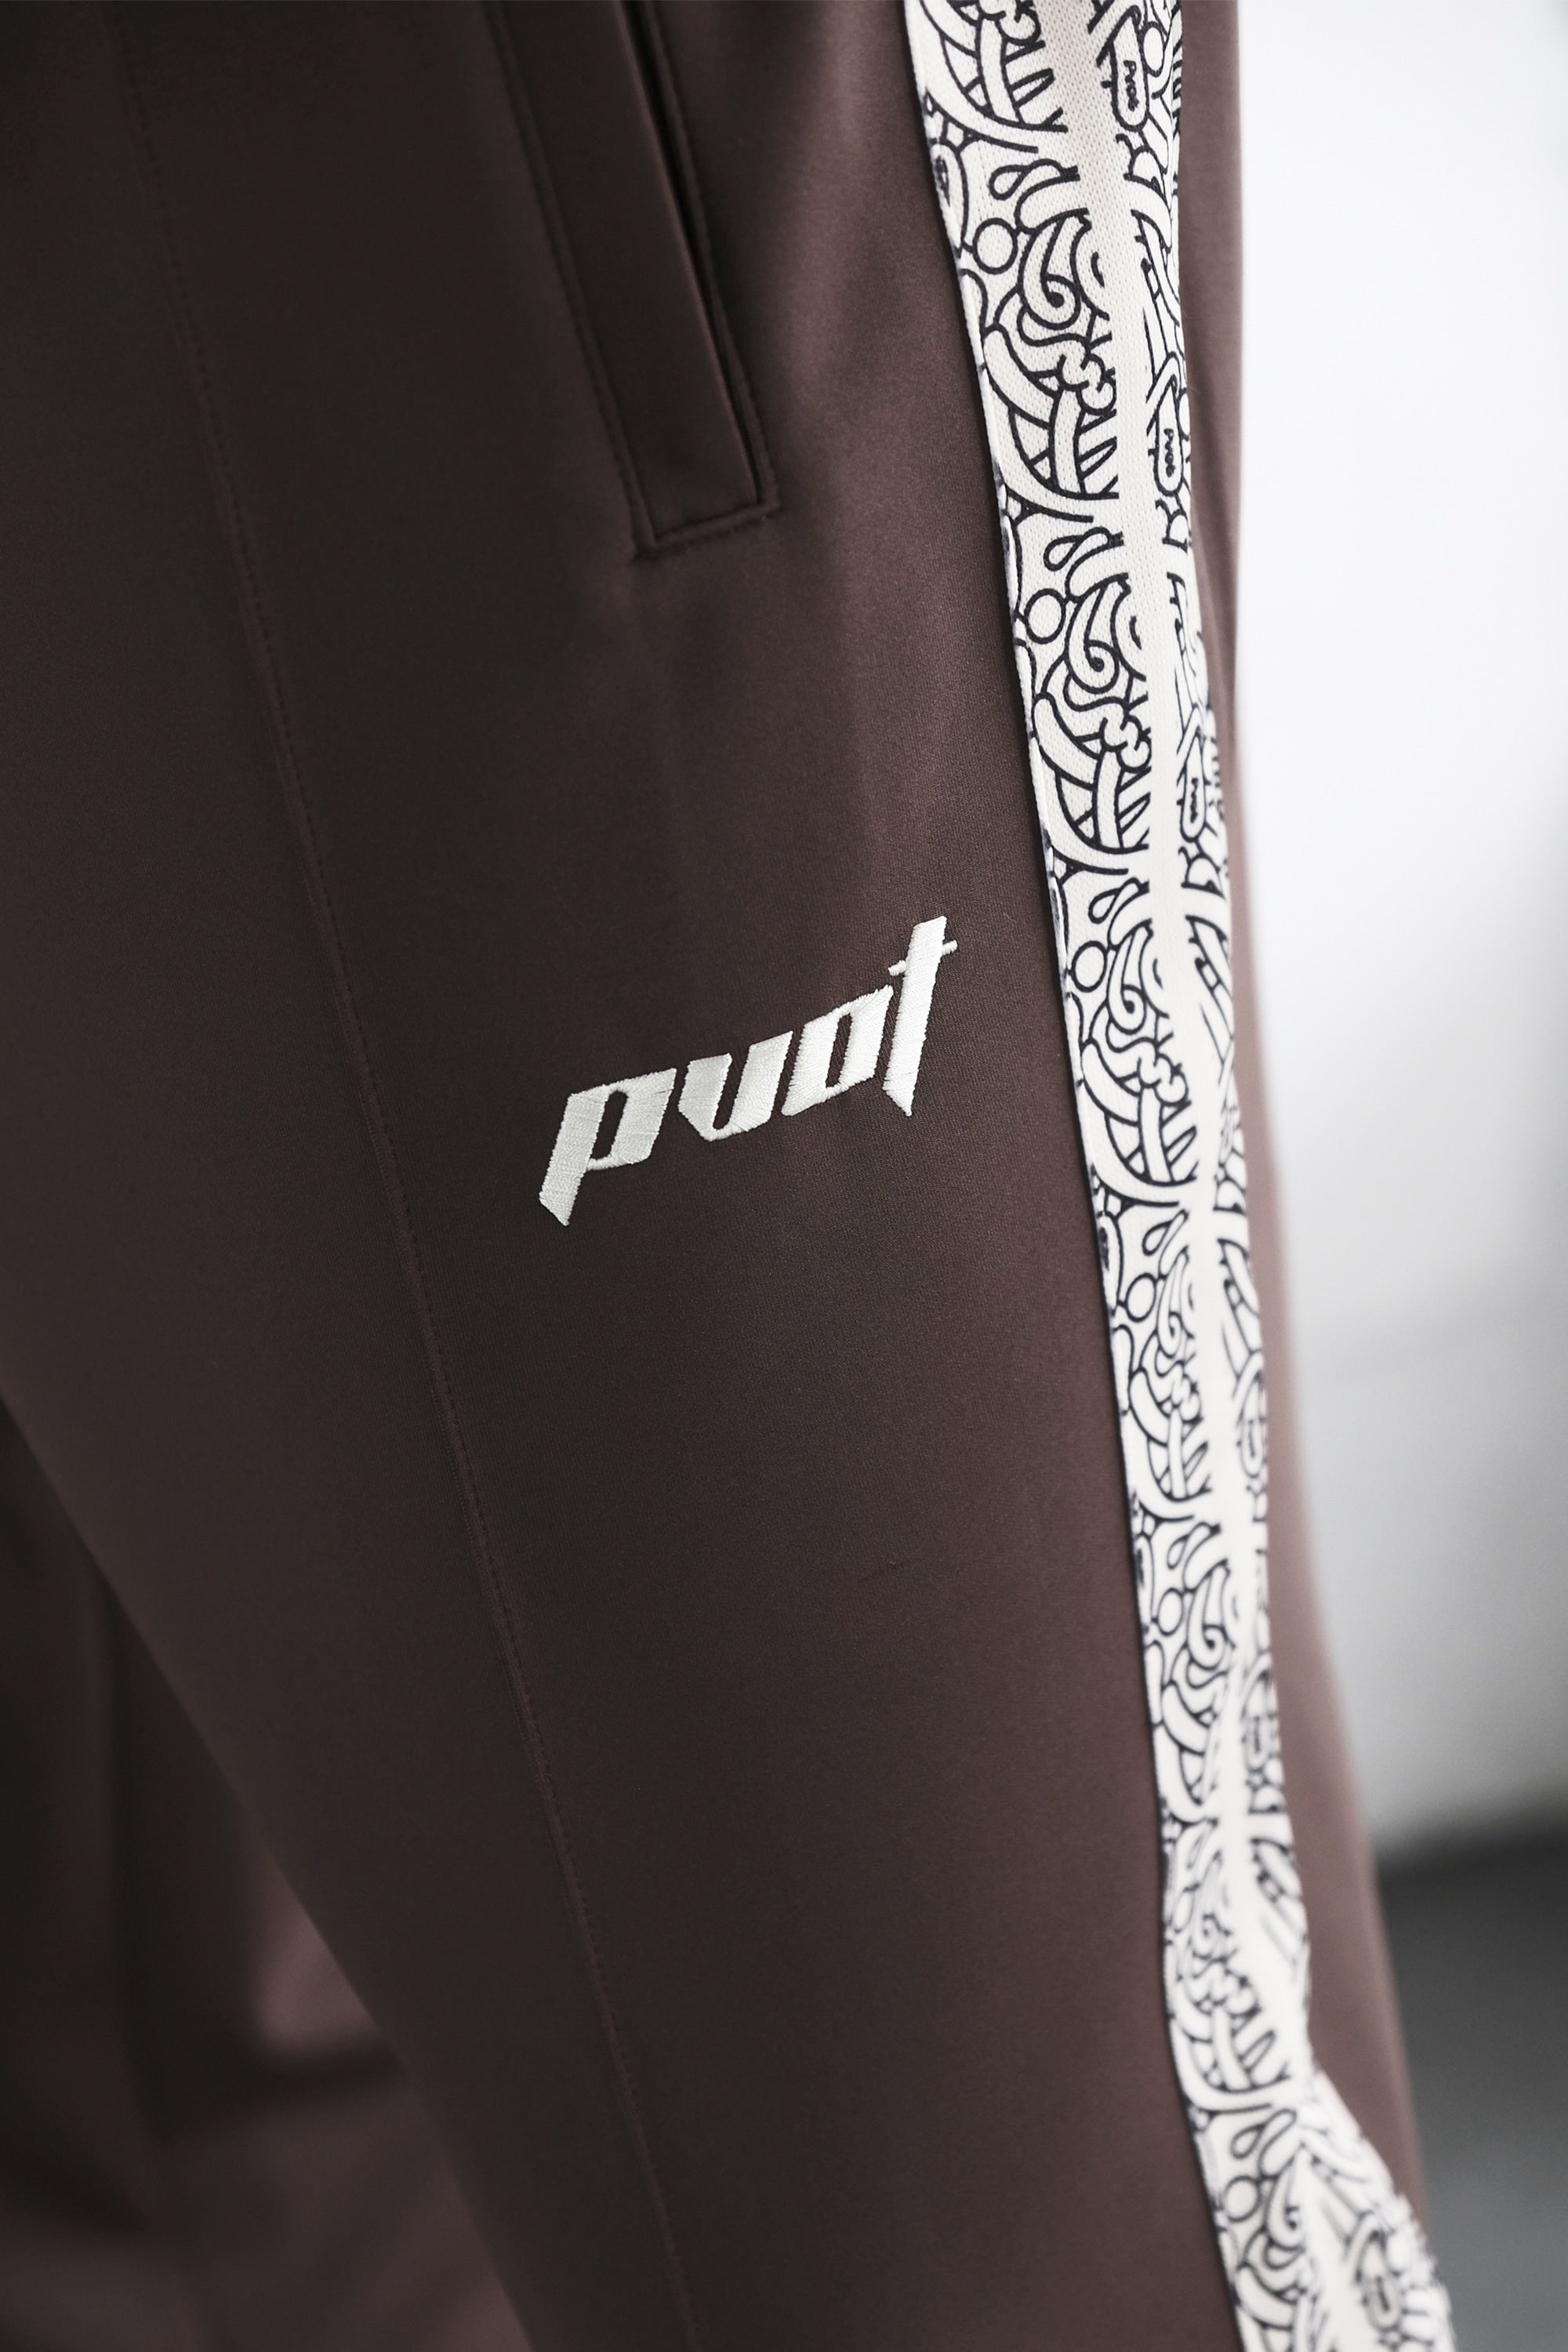 Pvot "01" Jersey Track Pants (Charcoal)